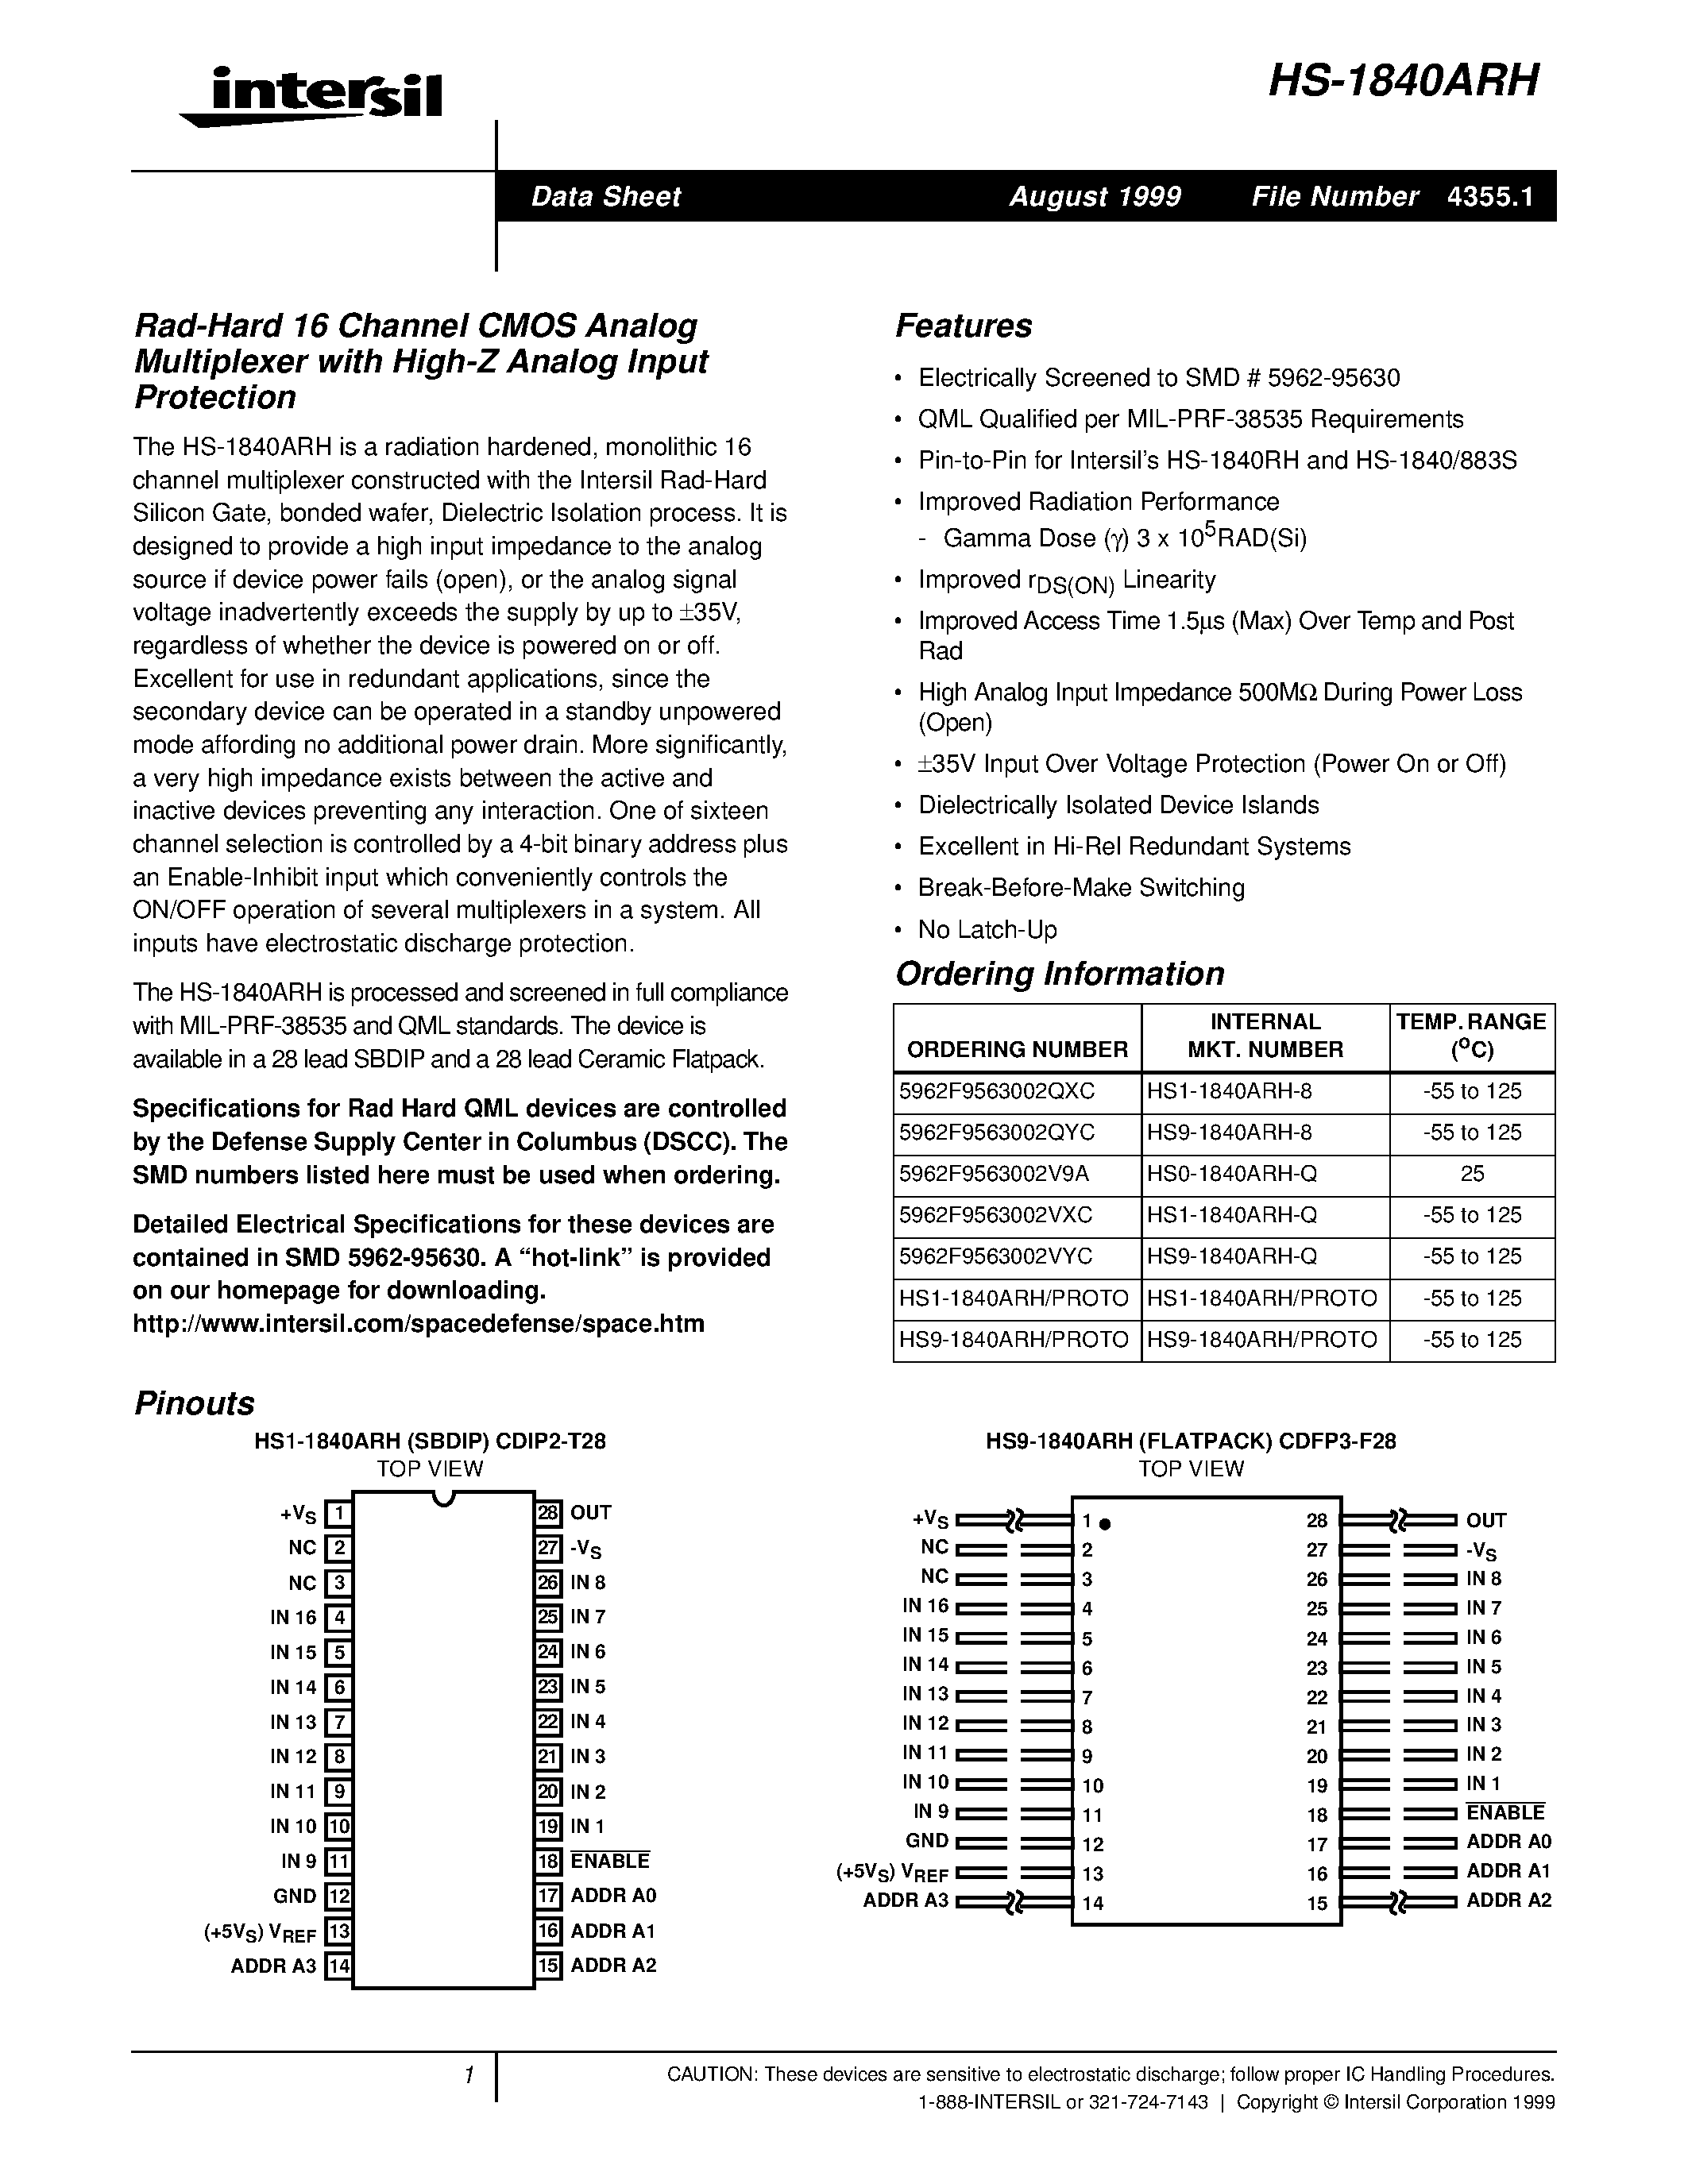 Даташит 5962F9563002QYC - Rad-Hard 16 Channel CMOS Analog Multiplexer with High-Z Analog Input Protection страница 1